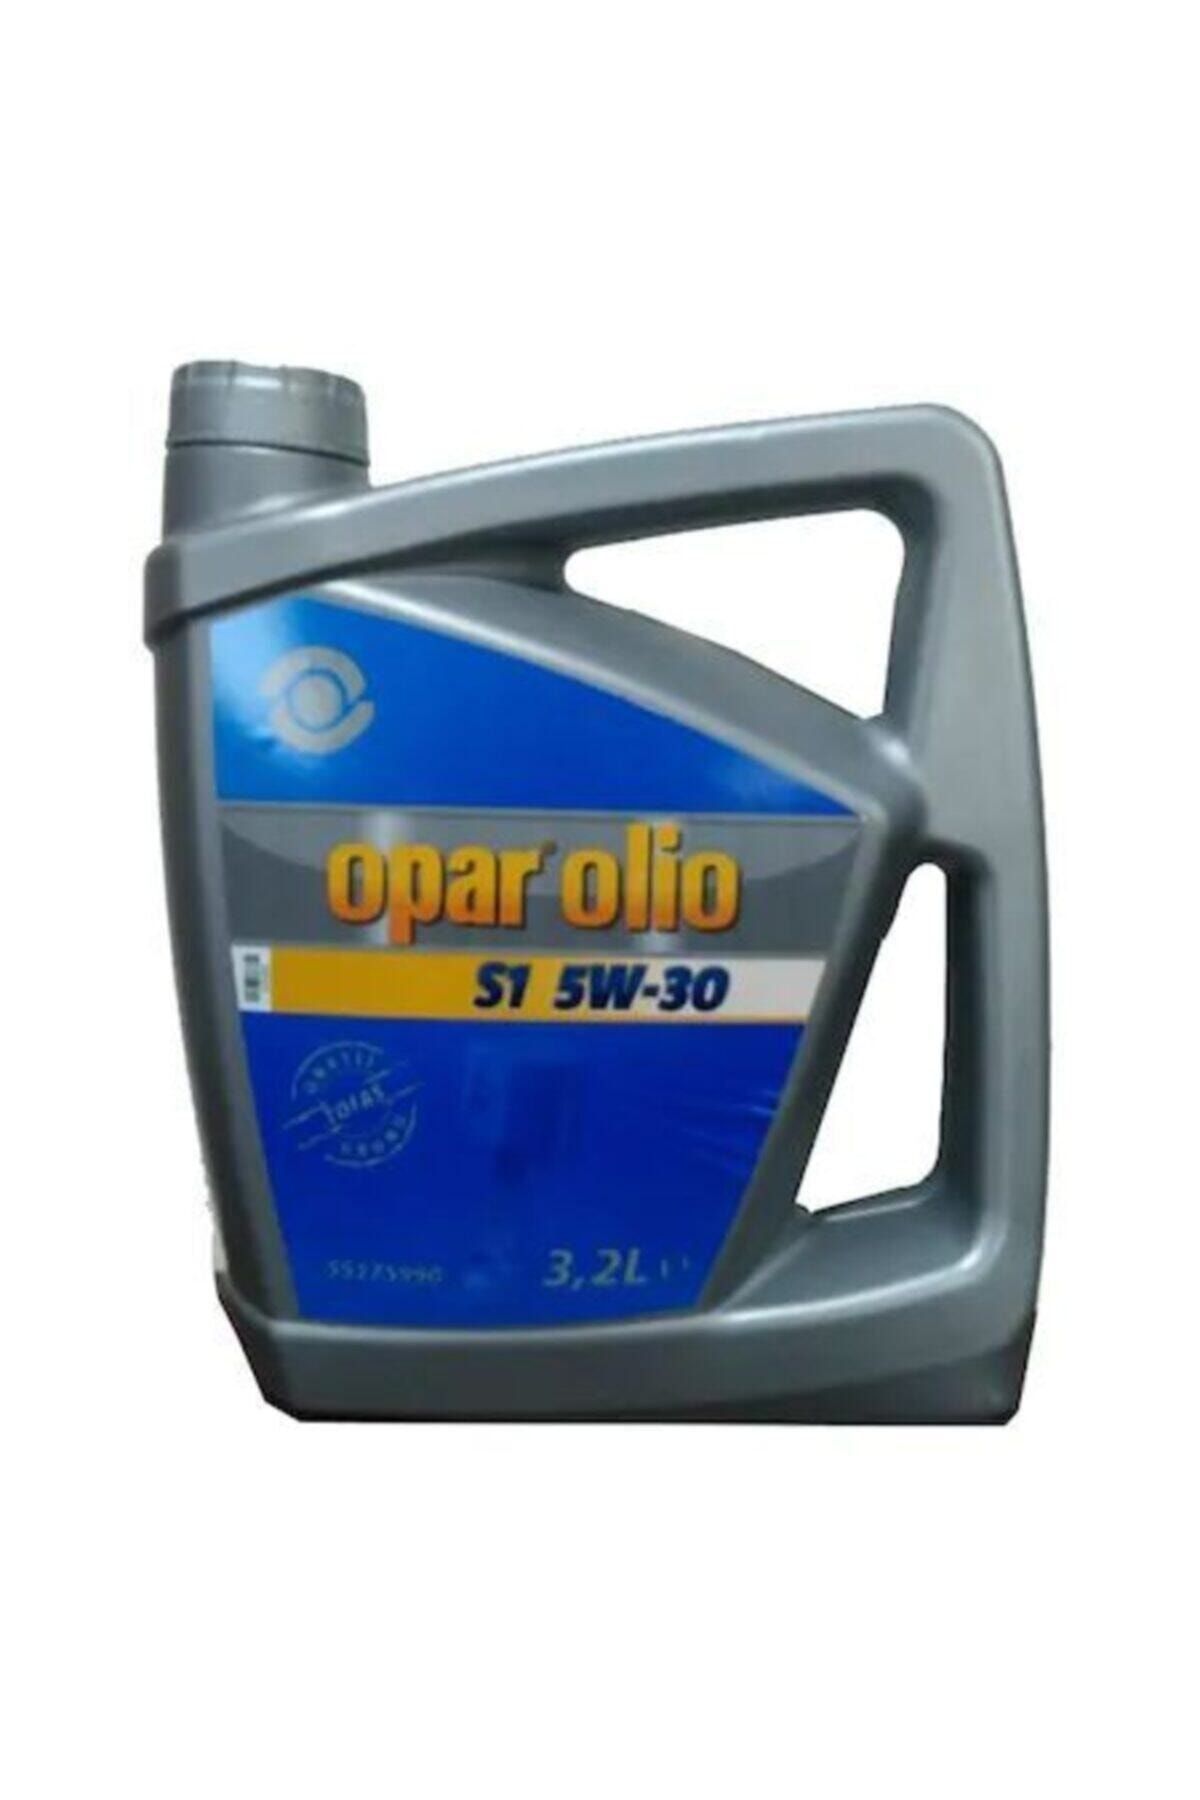 Biopark Cosmetics Opar Olio S1 5w-30 3.2 Litre